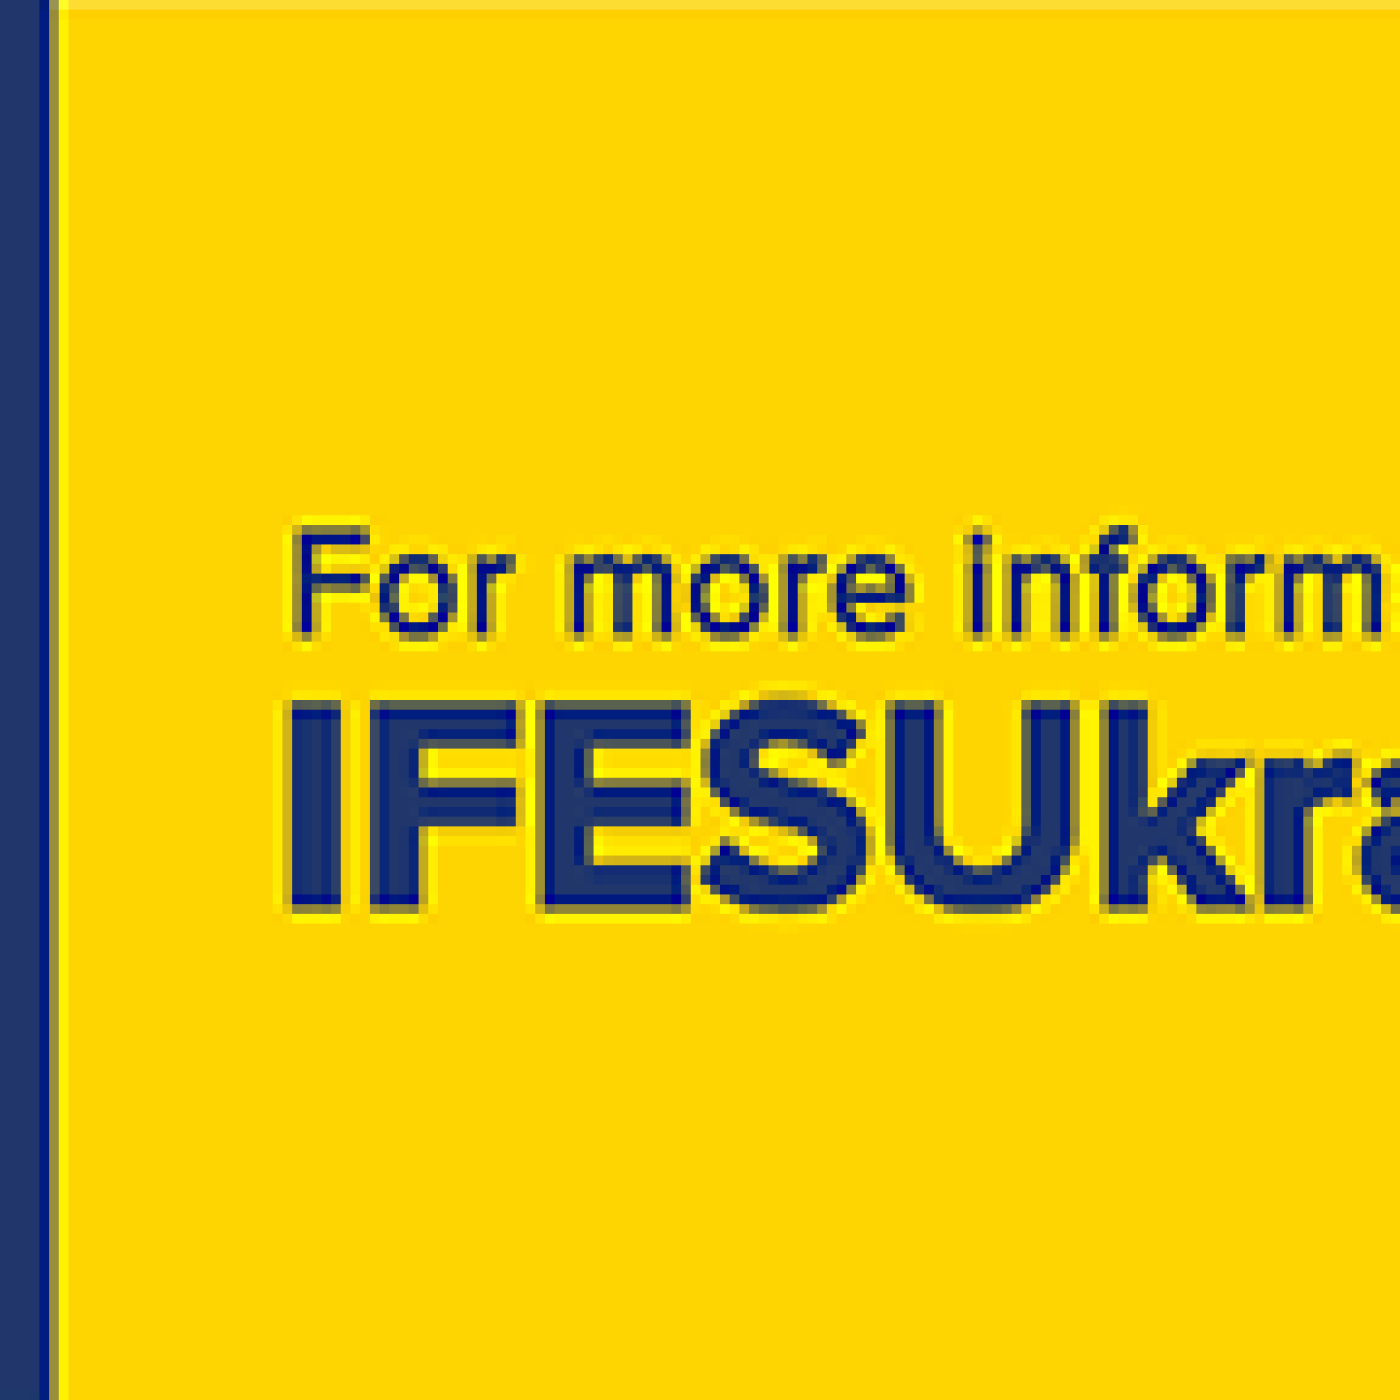 For more information, visit IFESUkraine.org